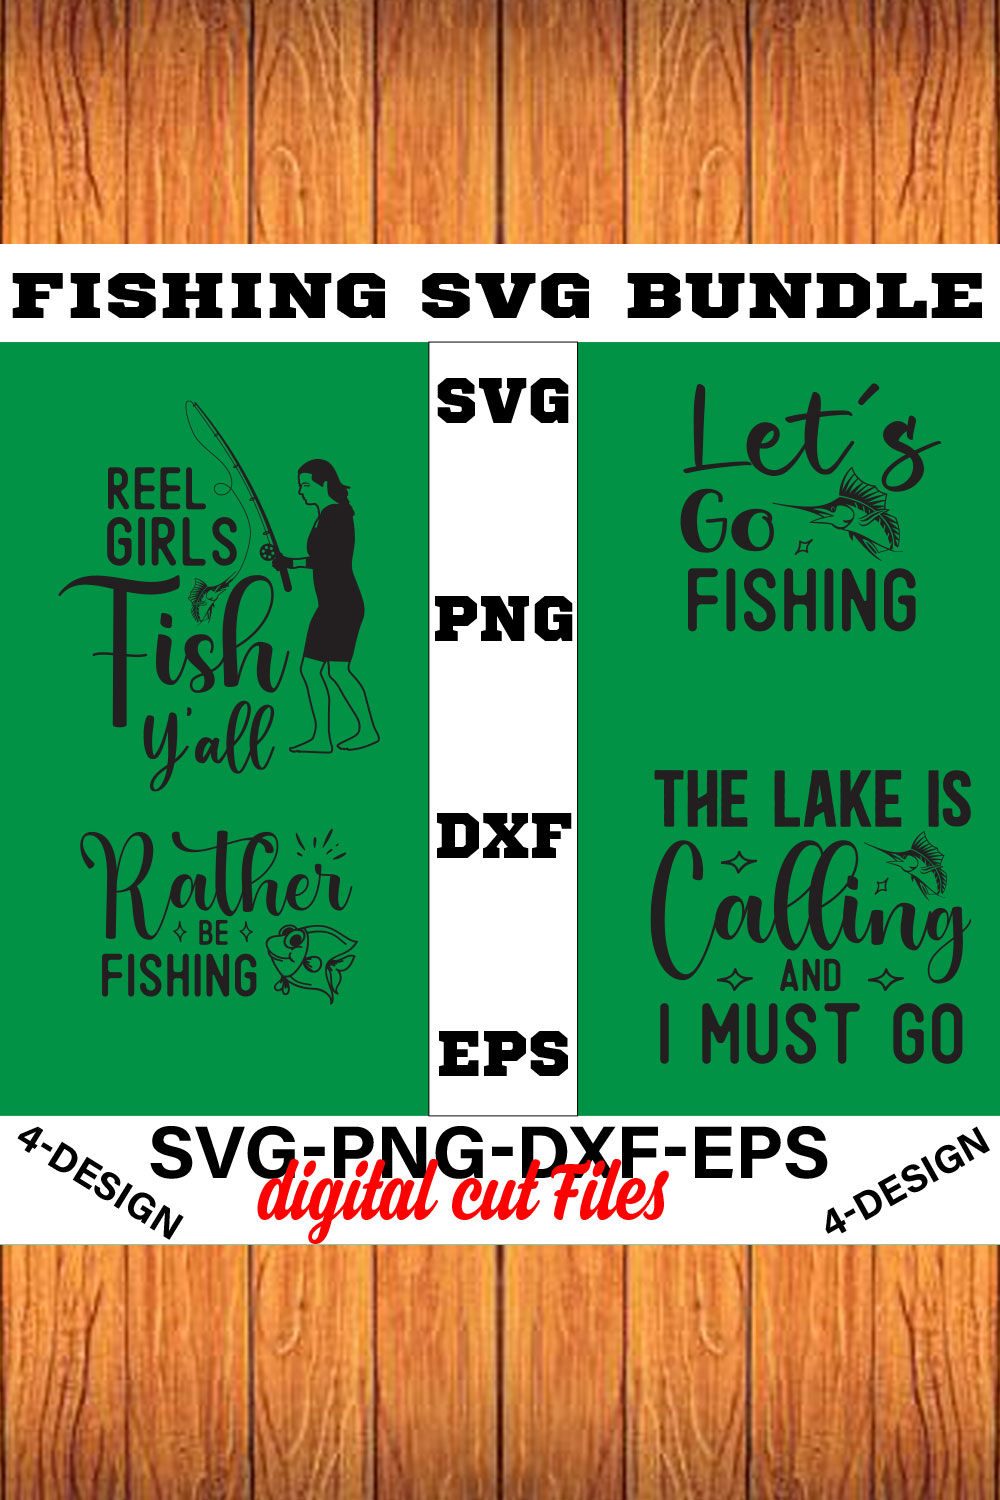 Fishing Design Bundle PNG ONLY, SVG bundle, Fishing svg, Fishing life Volume-04 pinterest preview image.